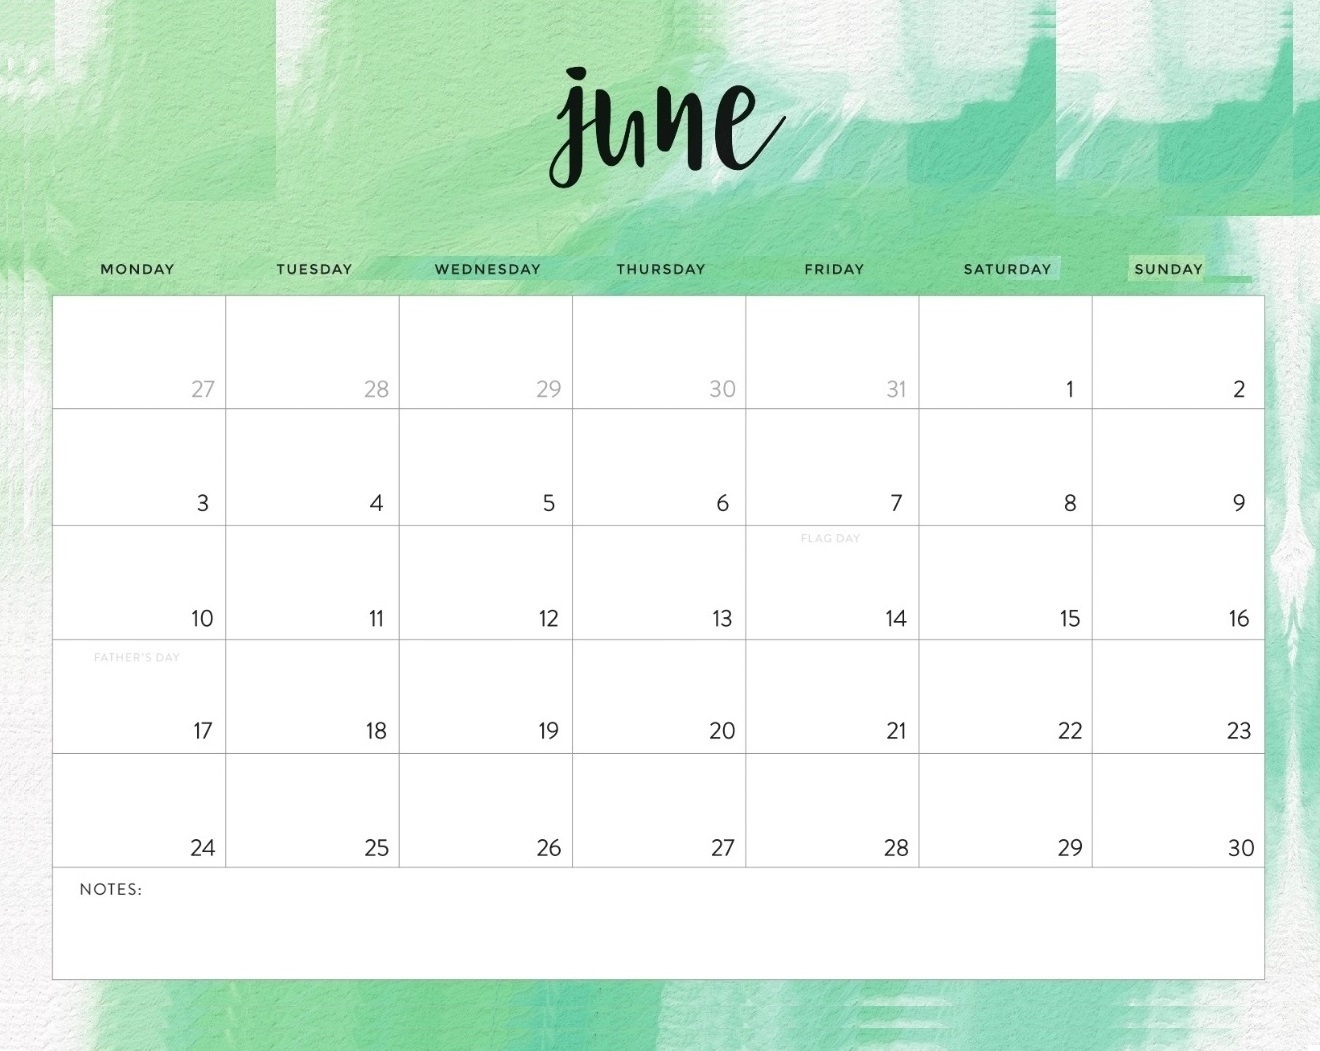 June 2019 Desk Calendar Printable - Free Printable Calendar Dashing Printable Desk Calender South Africa